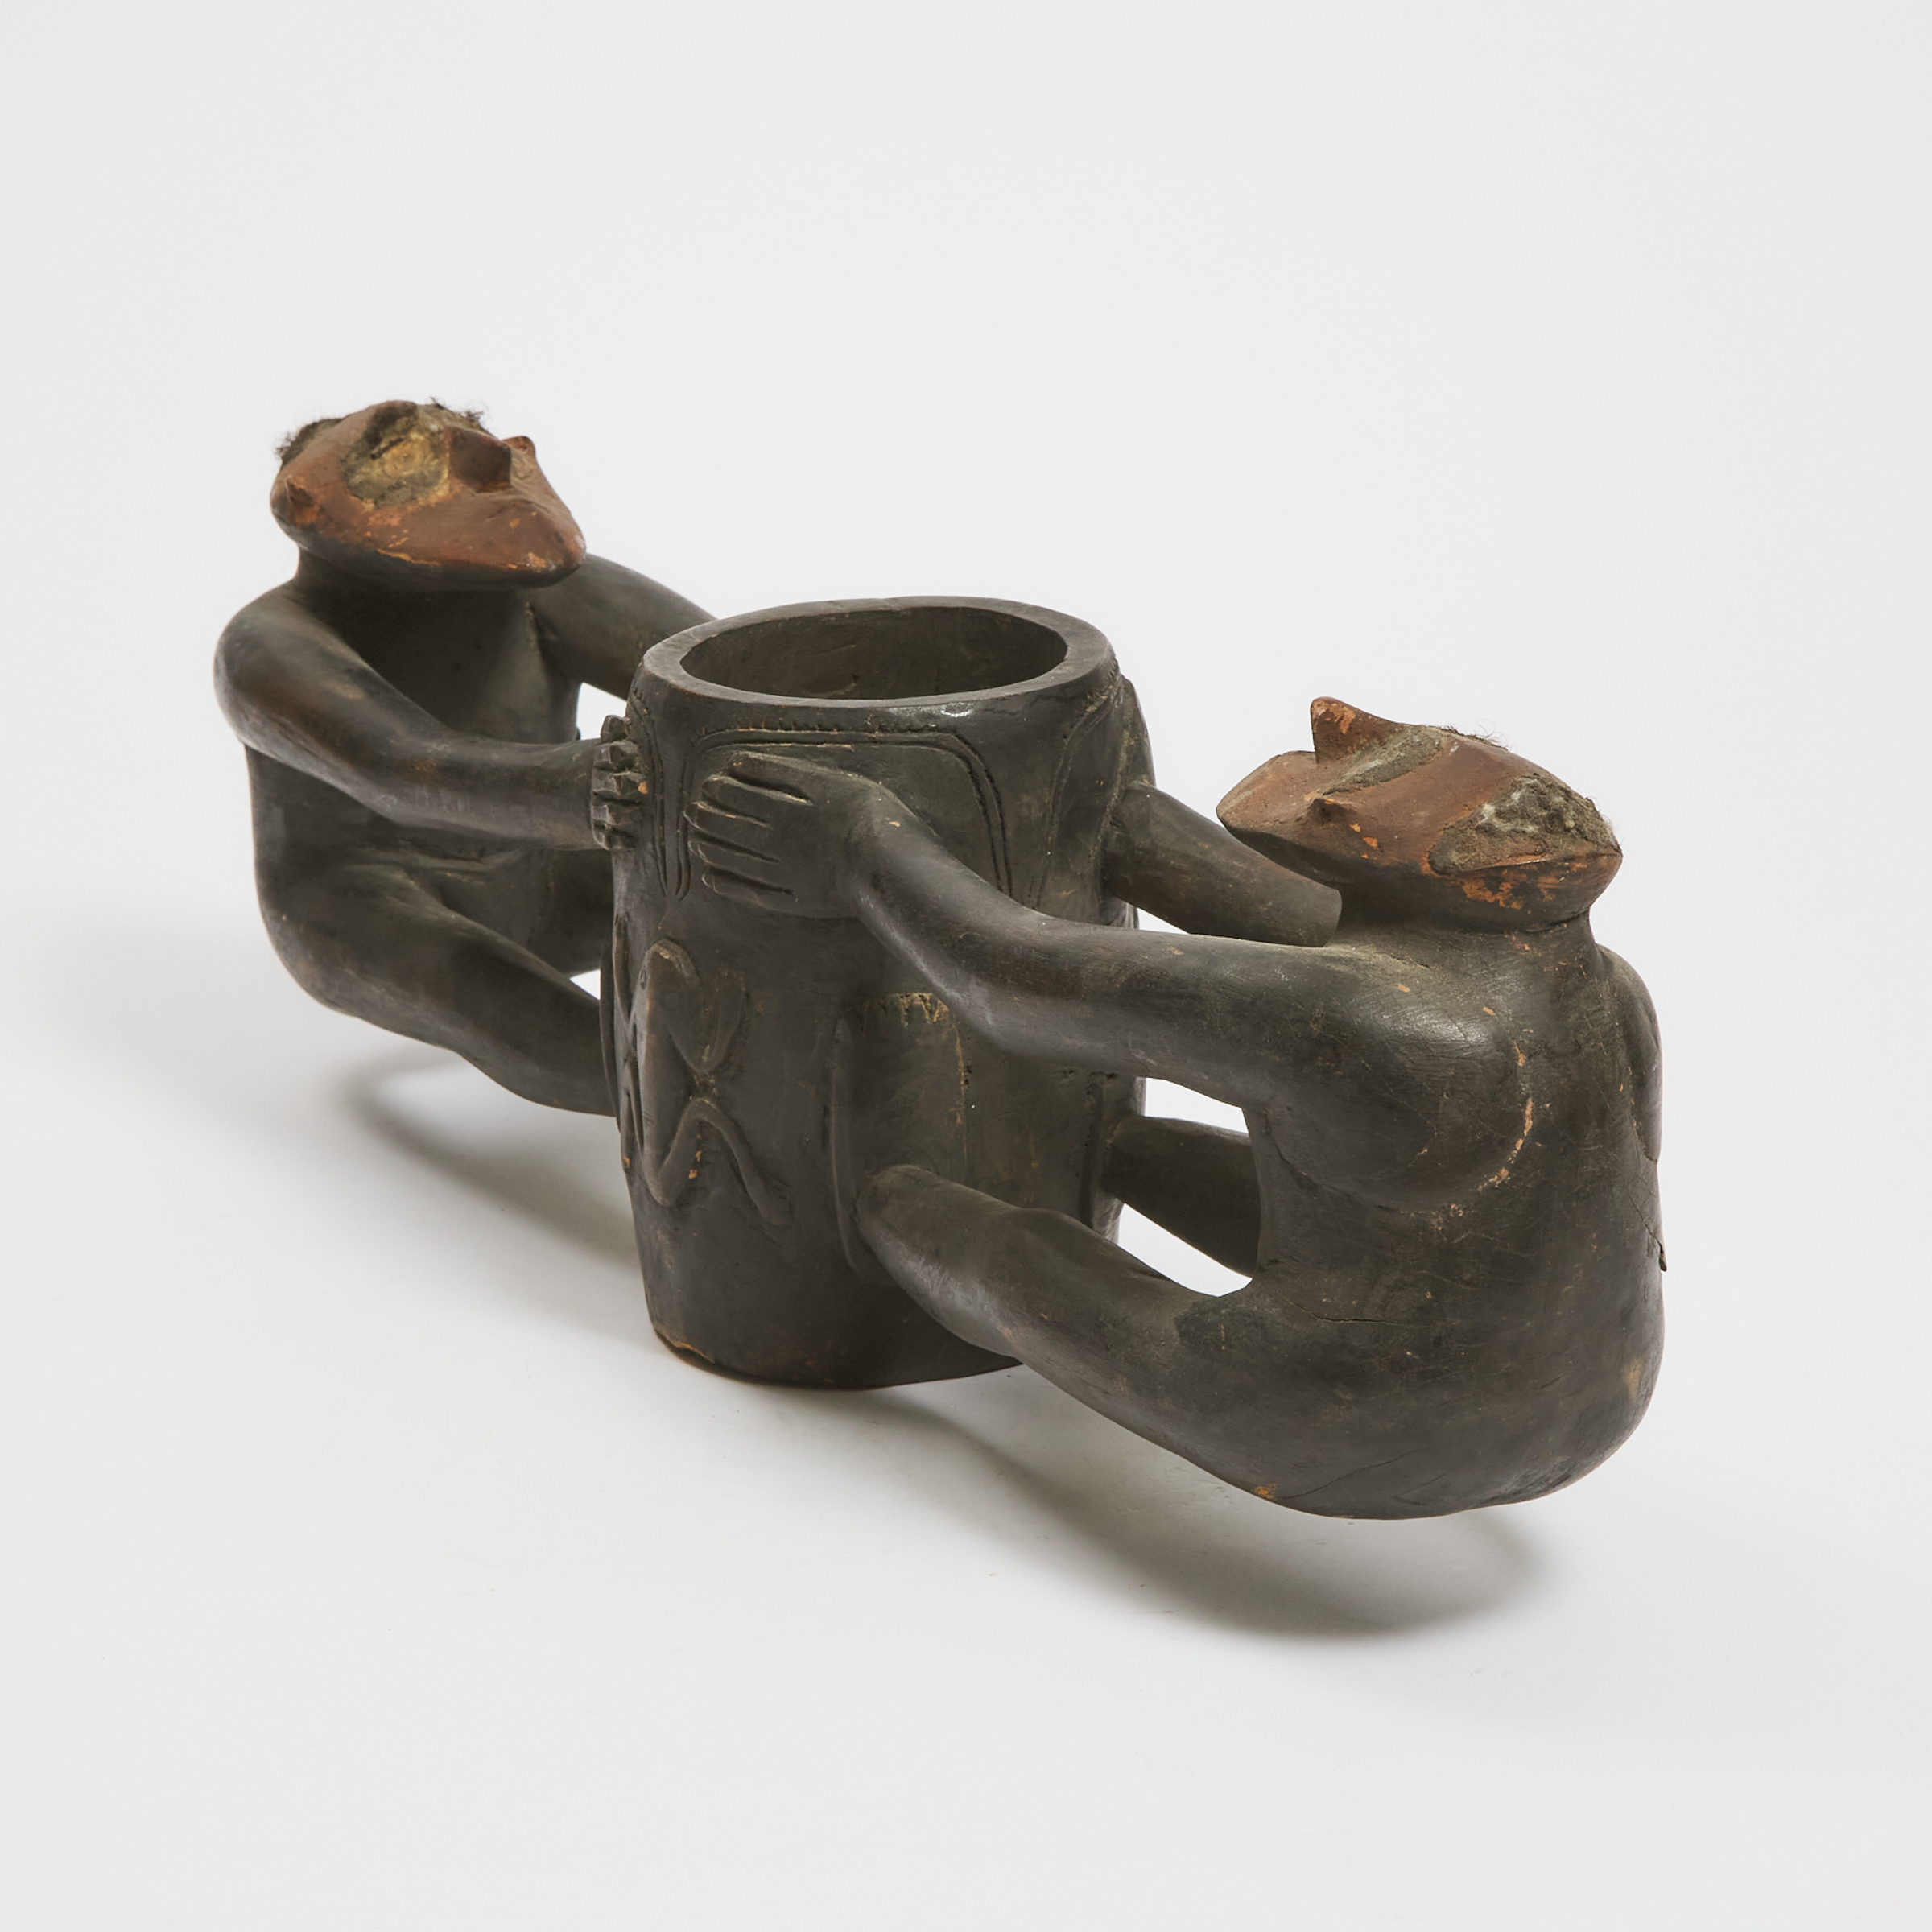 Papua New Guinea Figural Vessel, possibly a mortar, 20th century